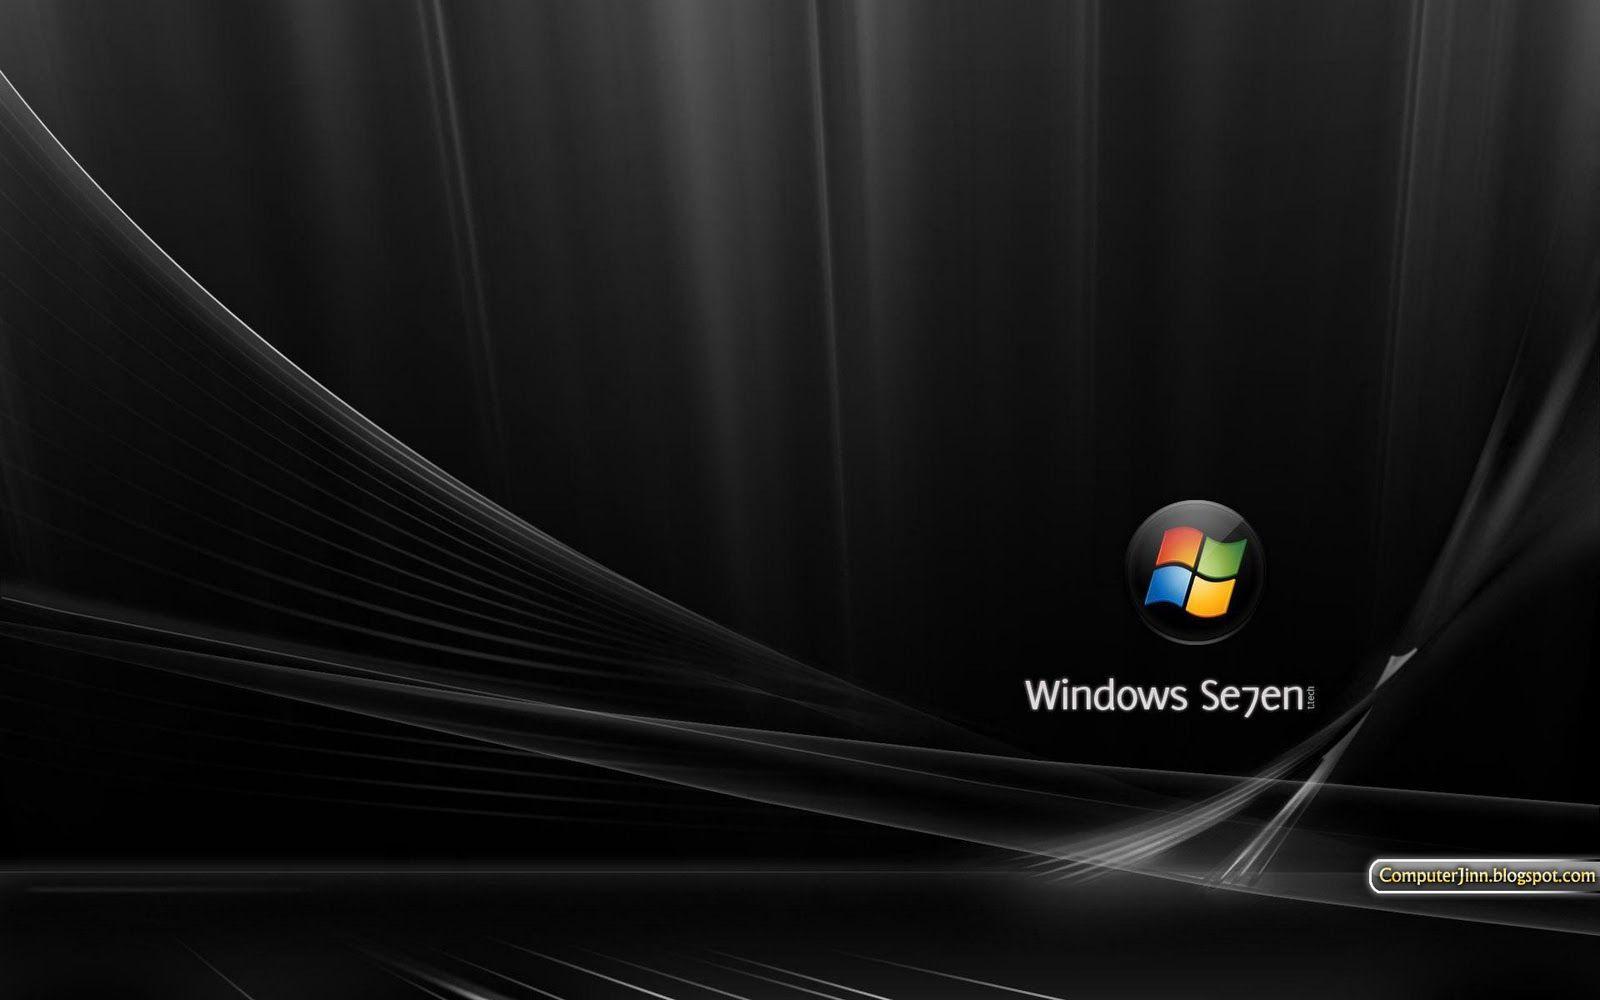 Windows 7 Black and Dark HD Wallpaper. Wallpaper, picture, image